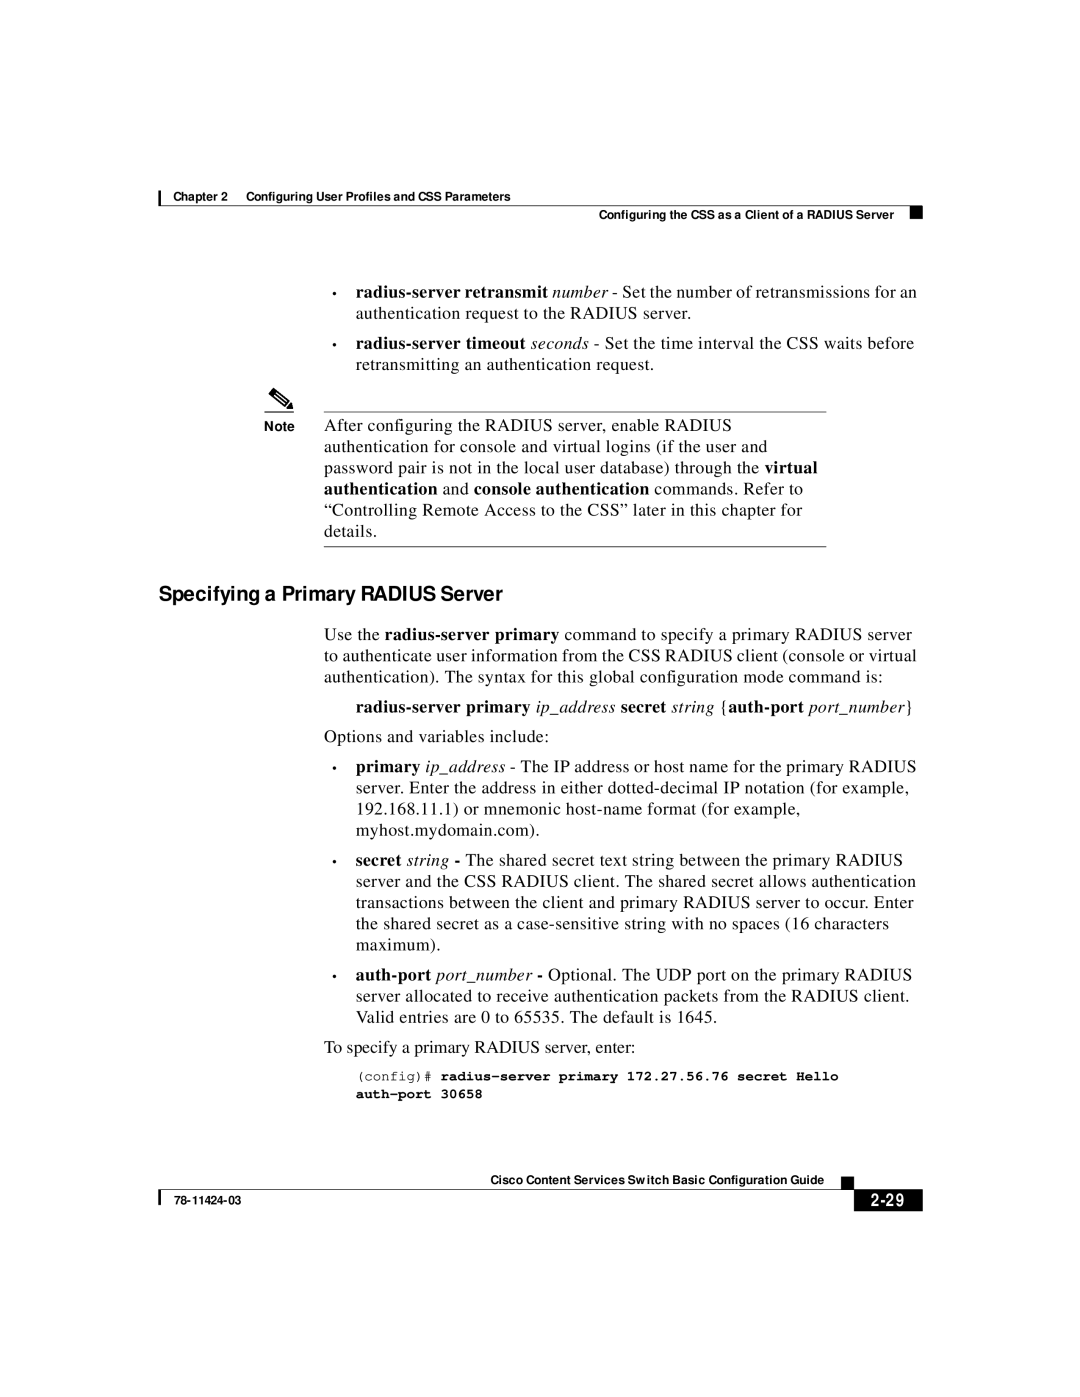 Cisco Systems 78-11424-03 manual Specifying a Primary RADIUS Server, 2-29 